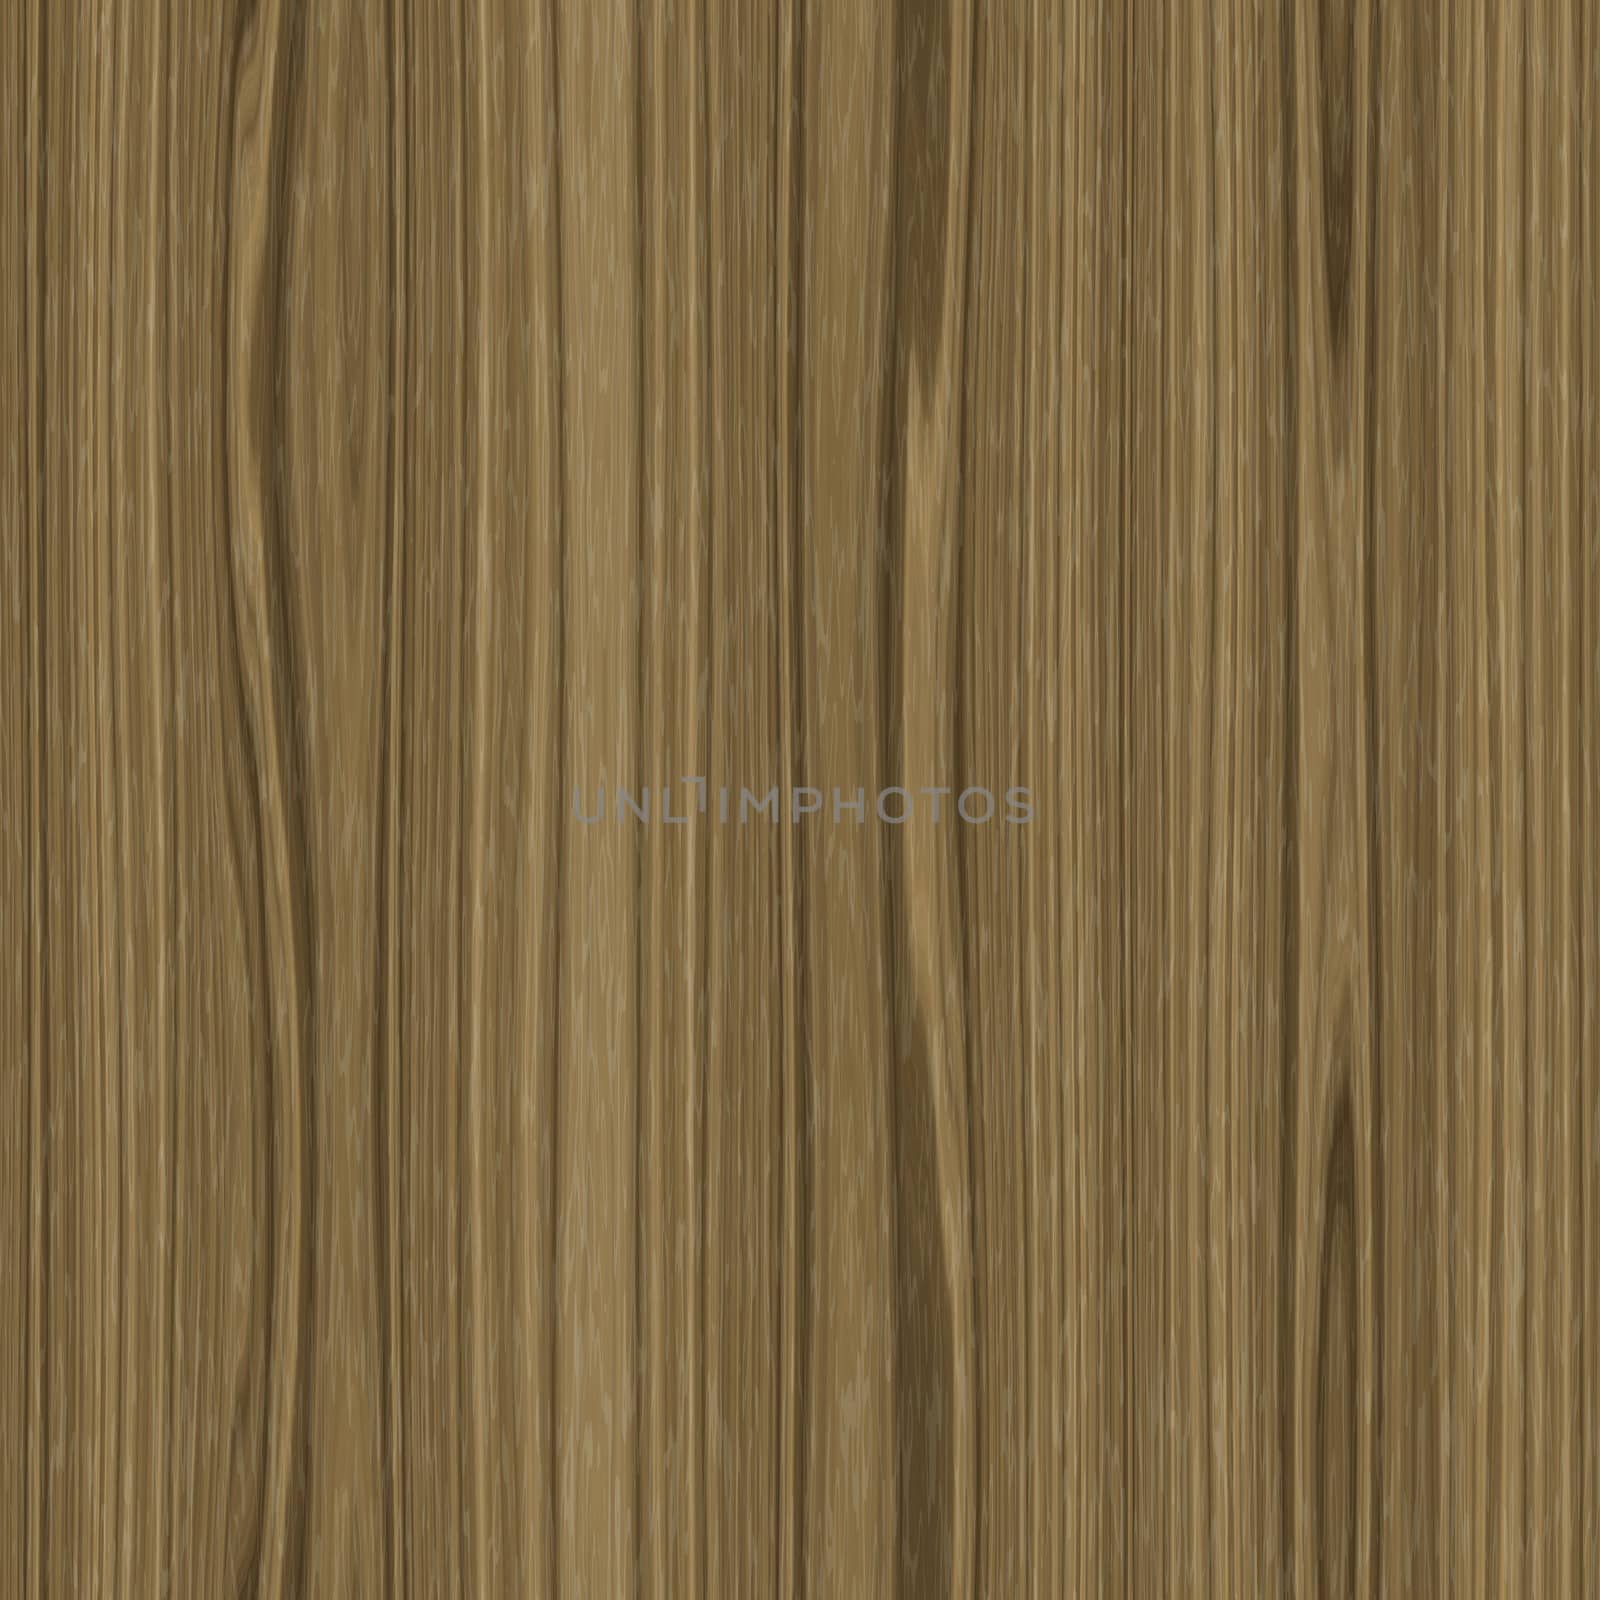 Grainy Wood Texture by kentoh